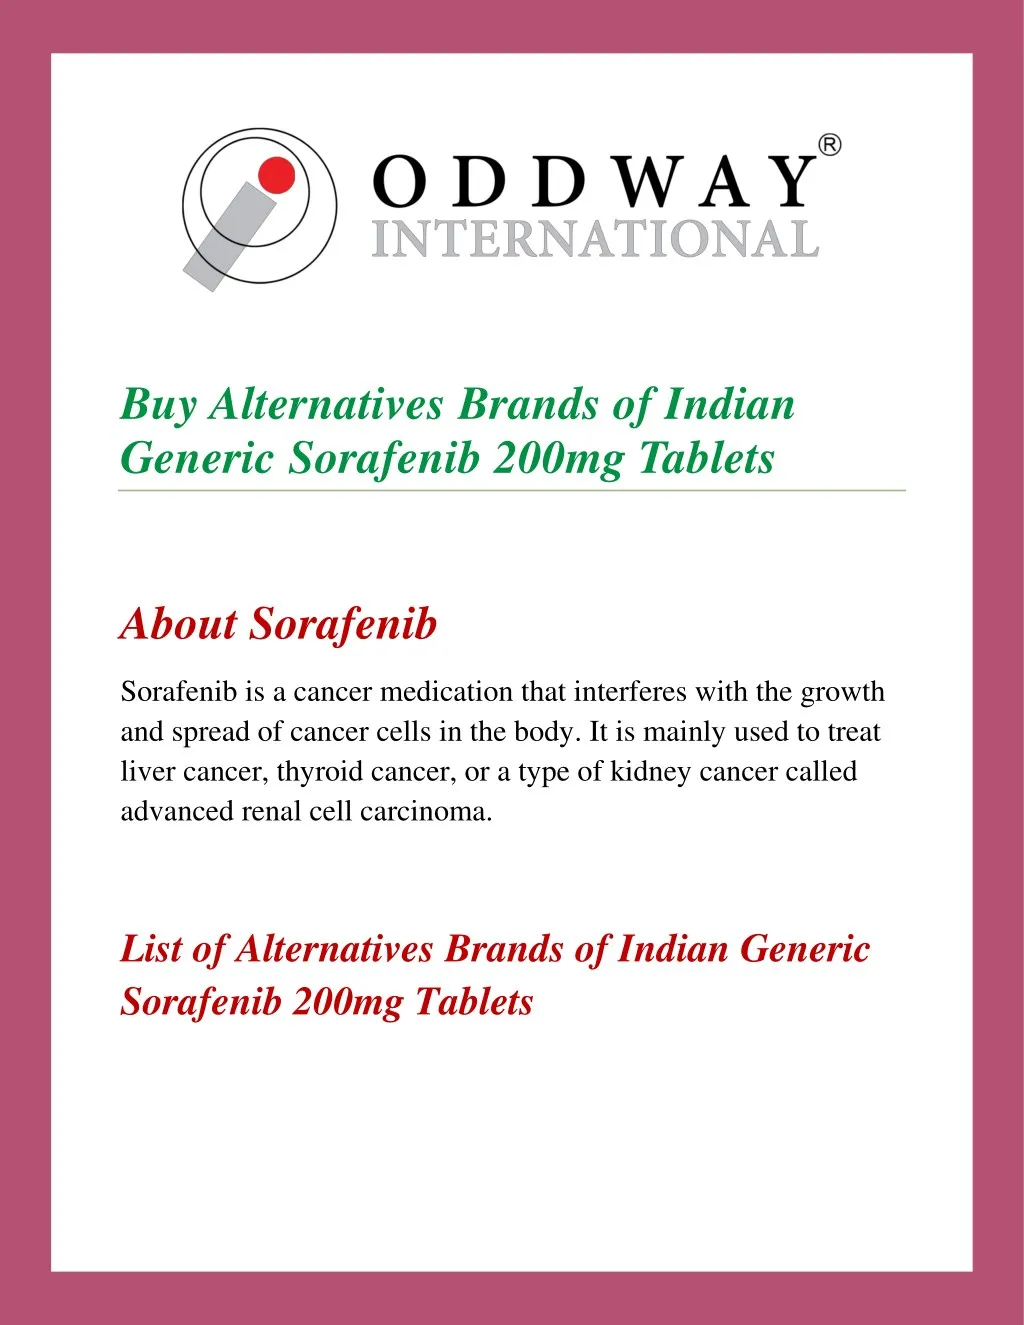 buy alternatives brands of indian generic